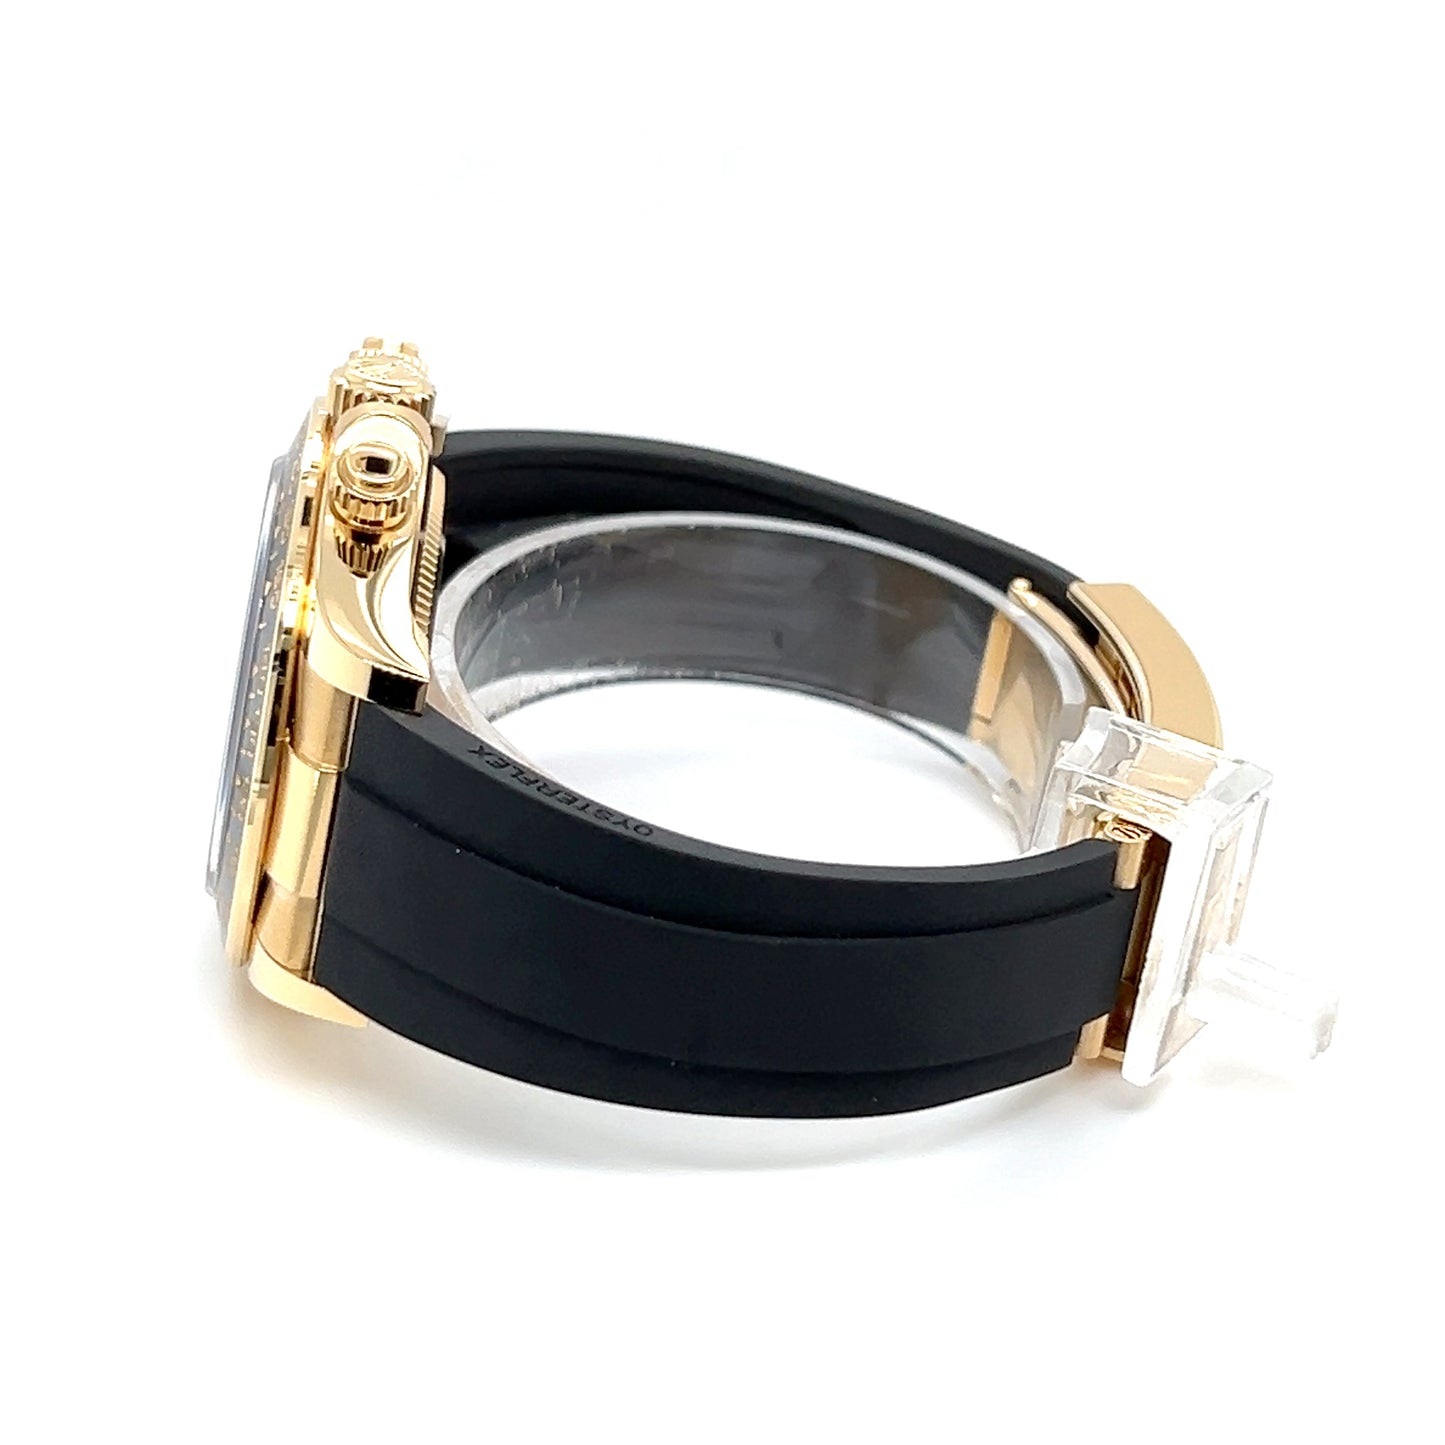 Rolex Cosmograph Daytona 40mm Black Ceramic Bezel Men's Luxury Watch Model #126518LN